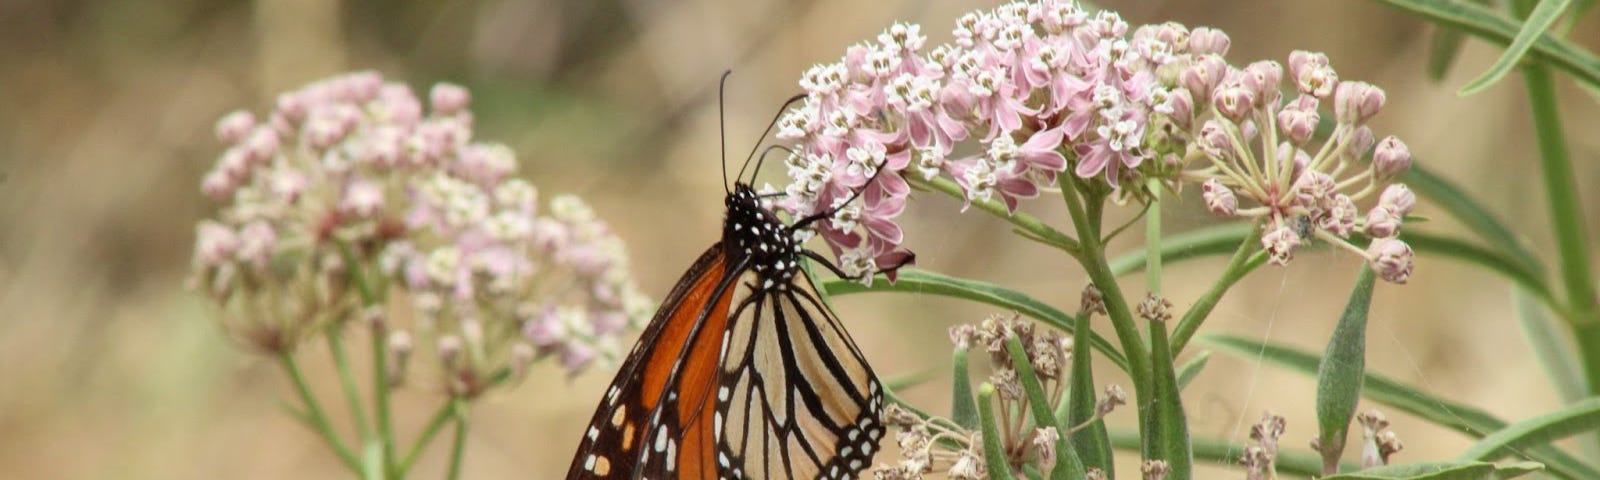 Monarch Butterfly resting on flower